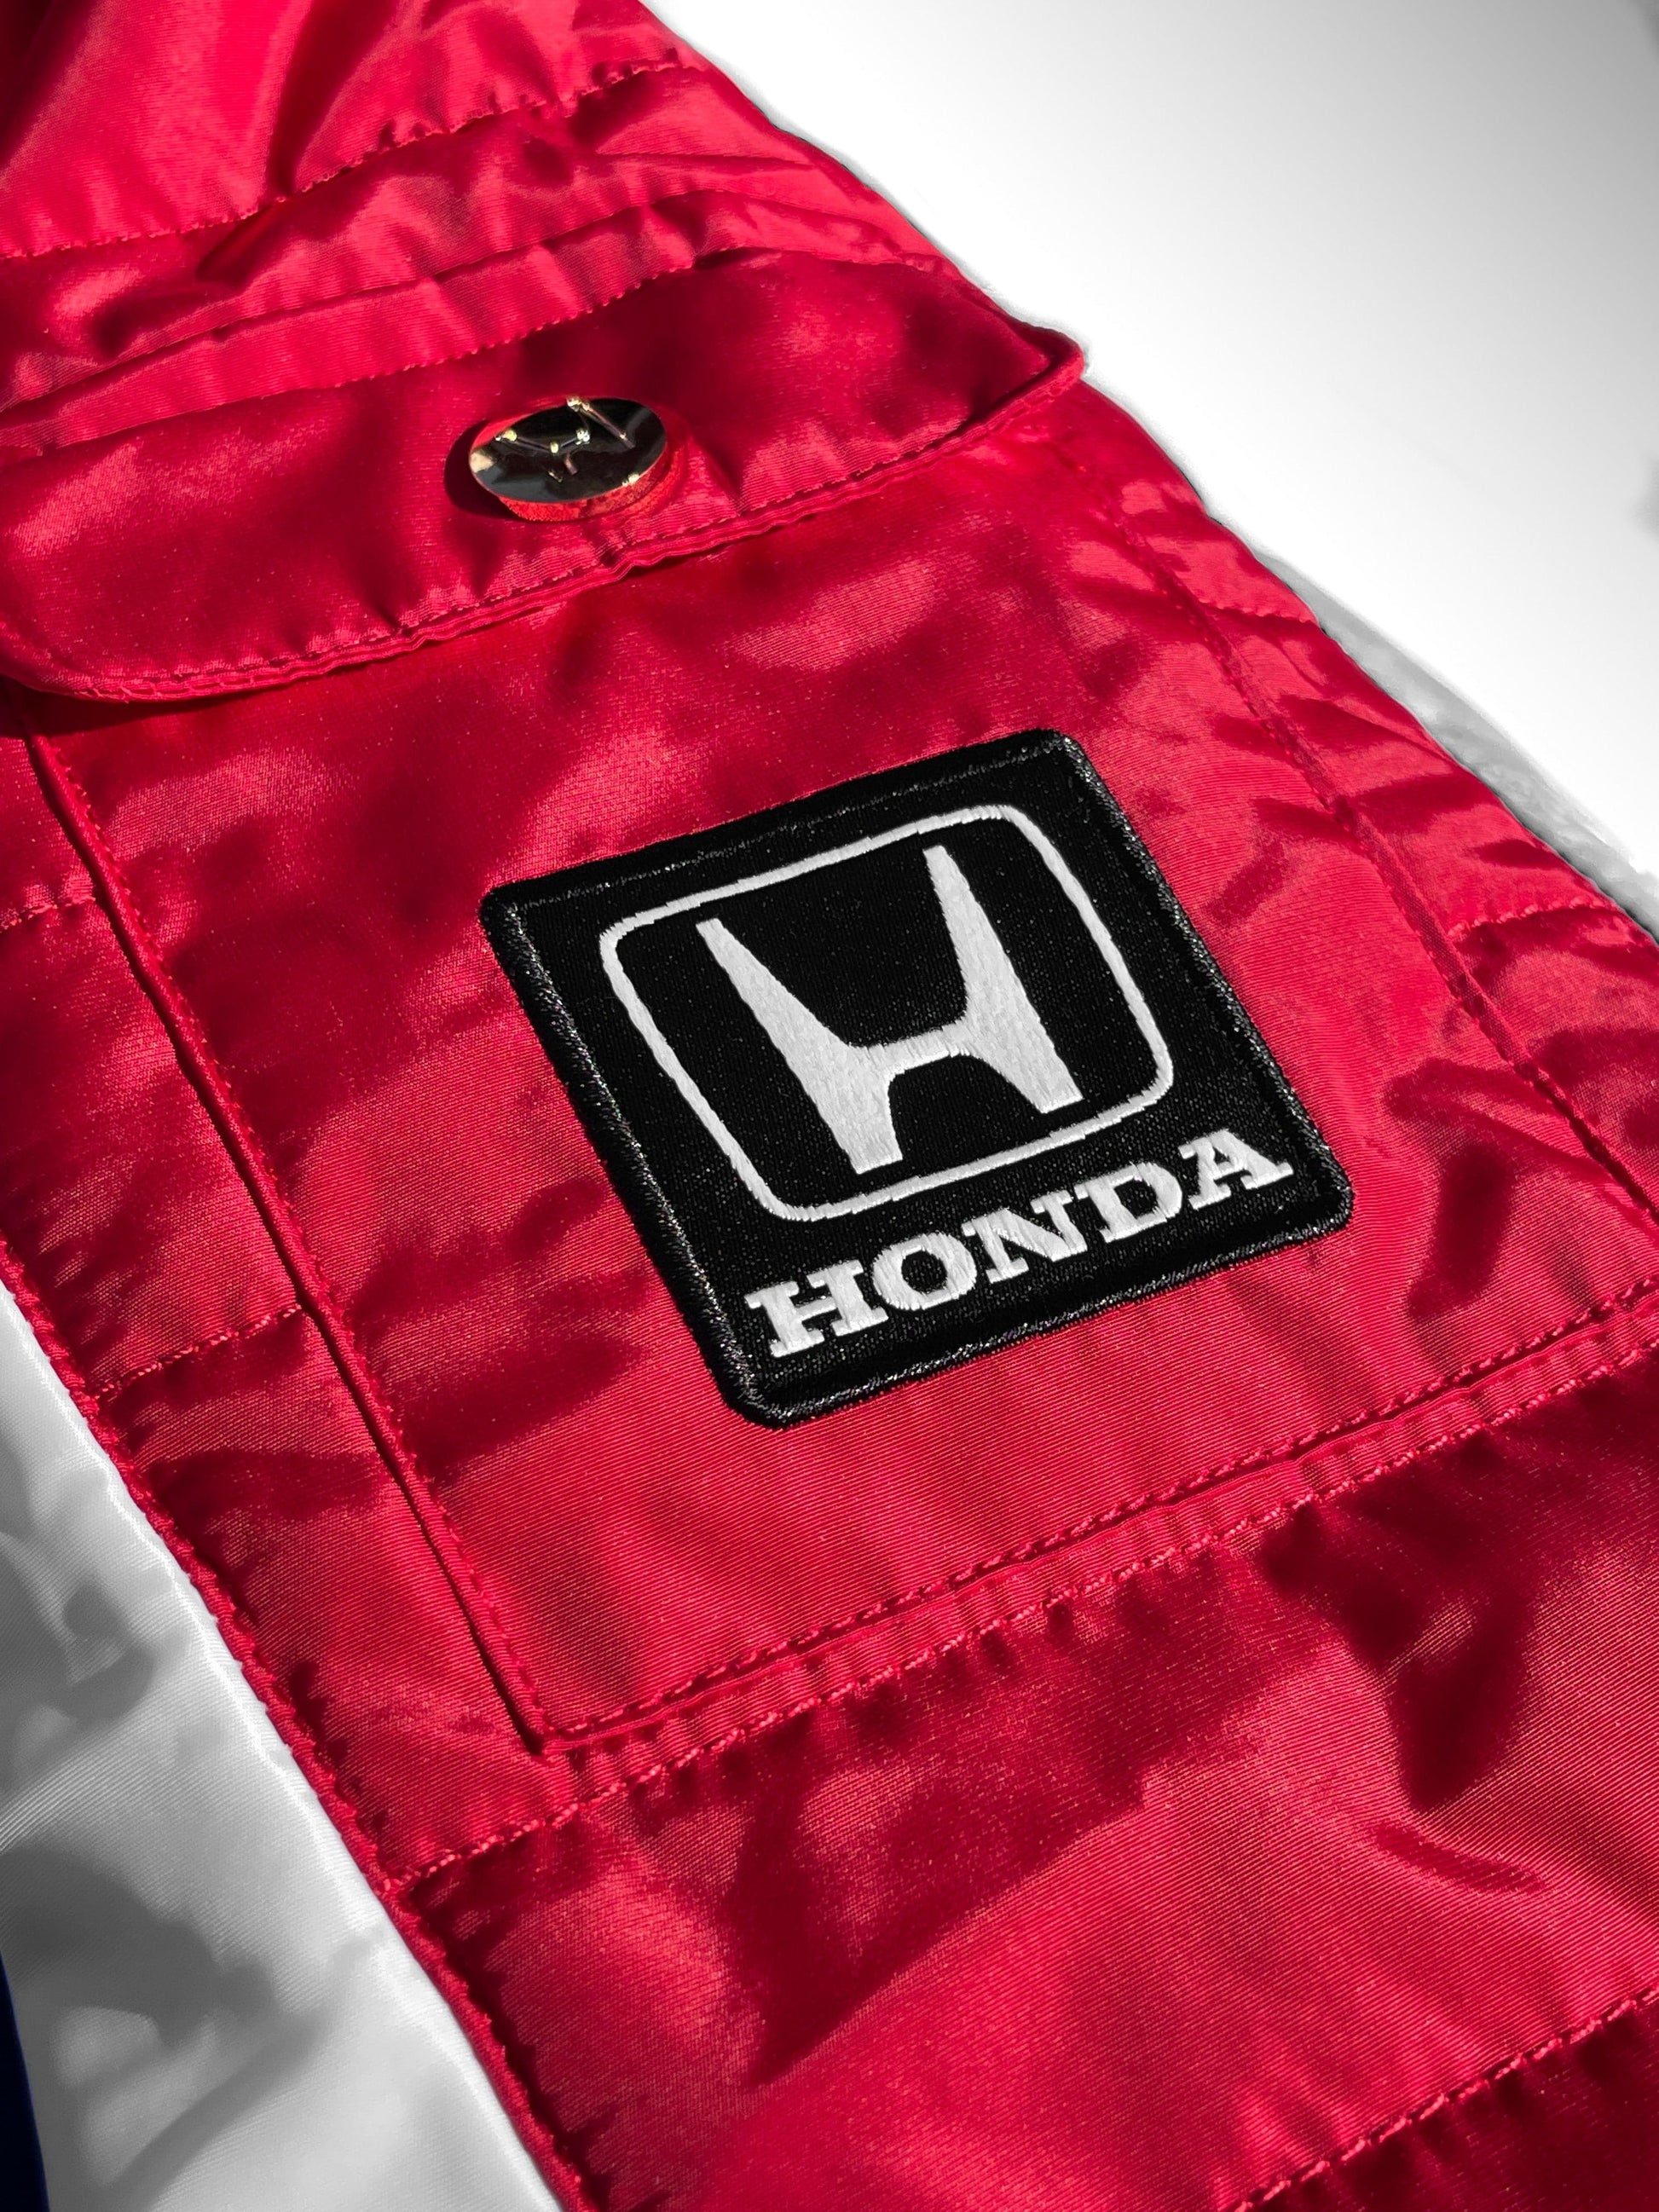 Honda Racing F1 Gifts & Merchandise for Sale